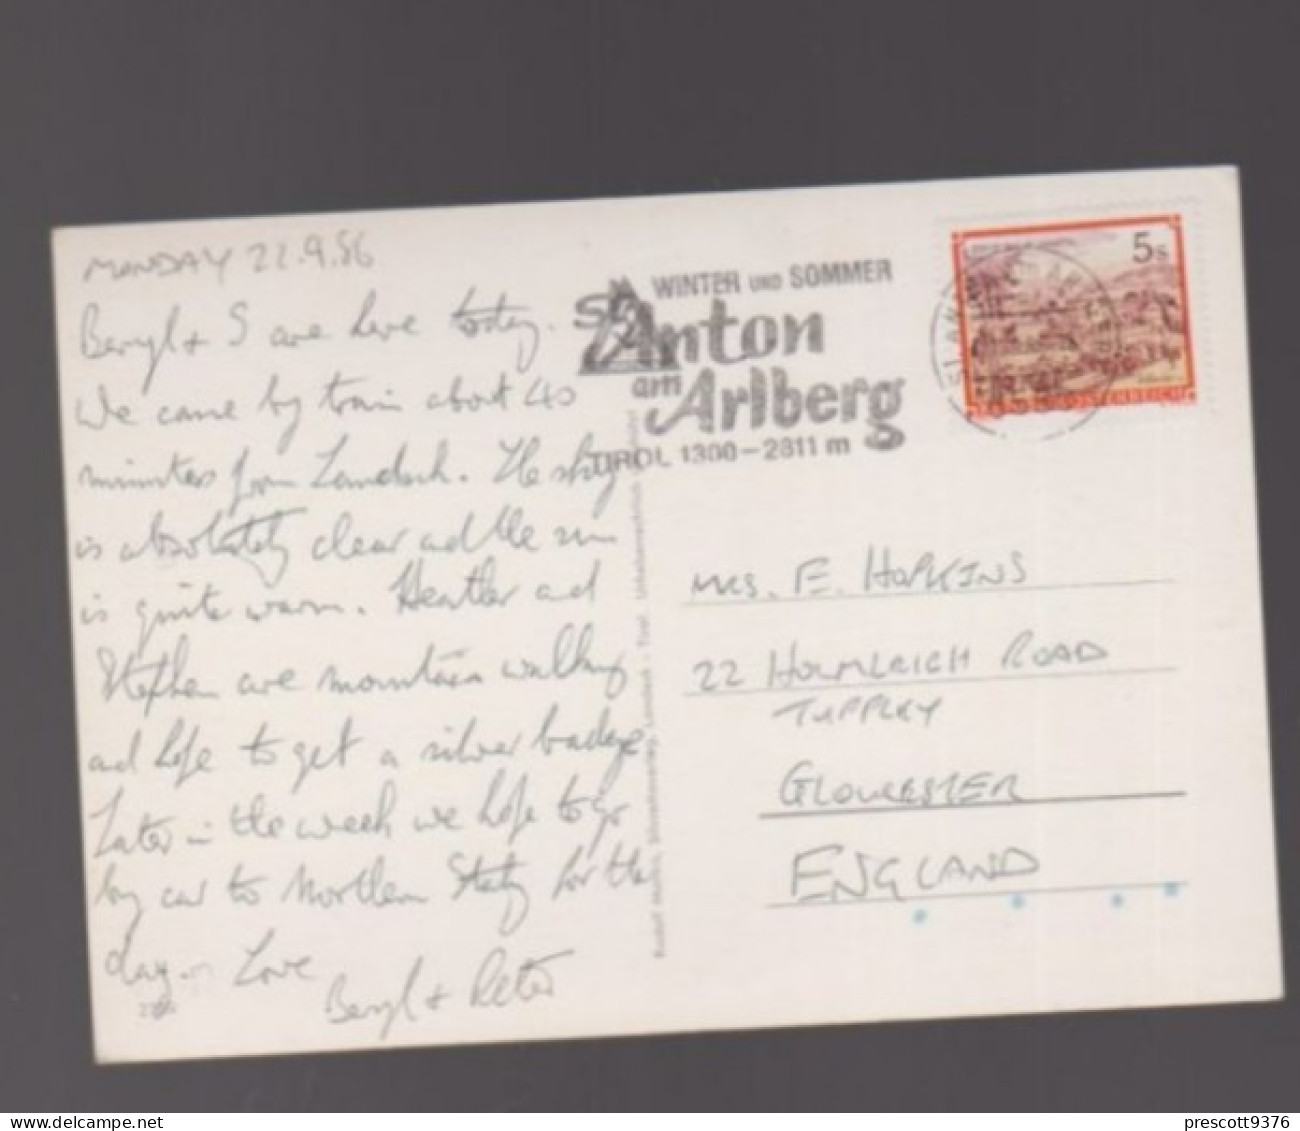 St Anton Am Arlborg, Tirol, Austria -  Used Postcard - Stamped - St. Anton Am Arlberg